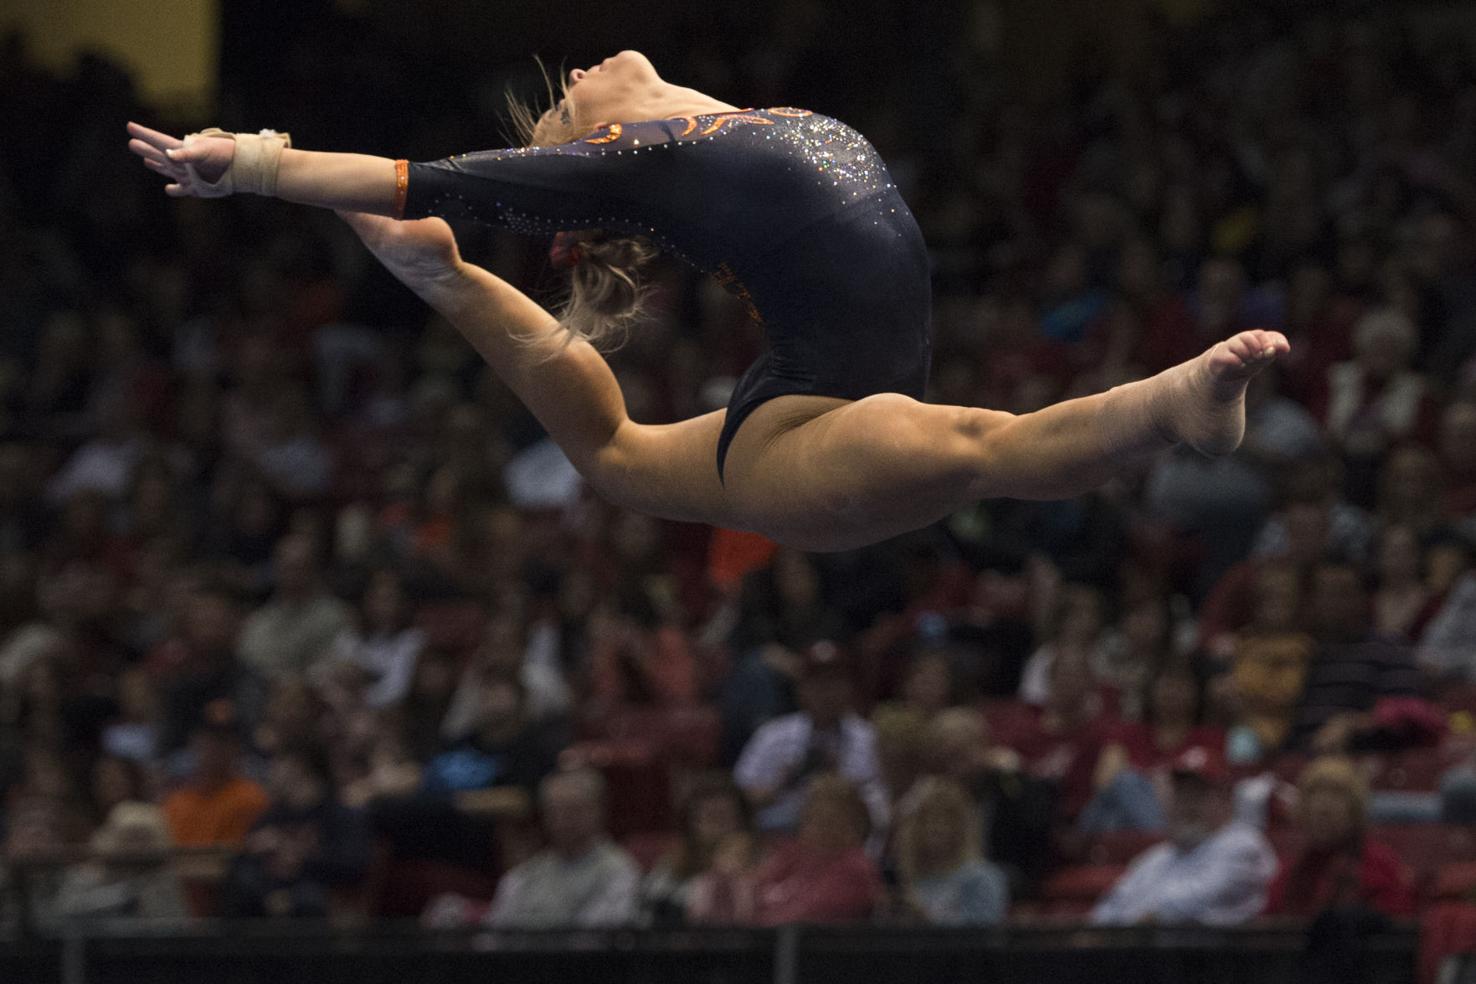 New roles for some as Auburn gymnastics set to open season